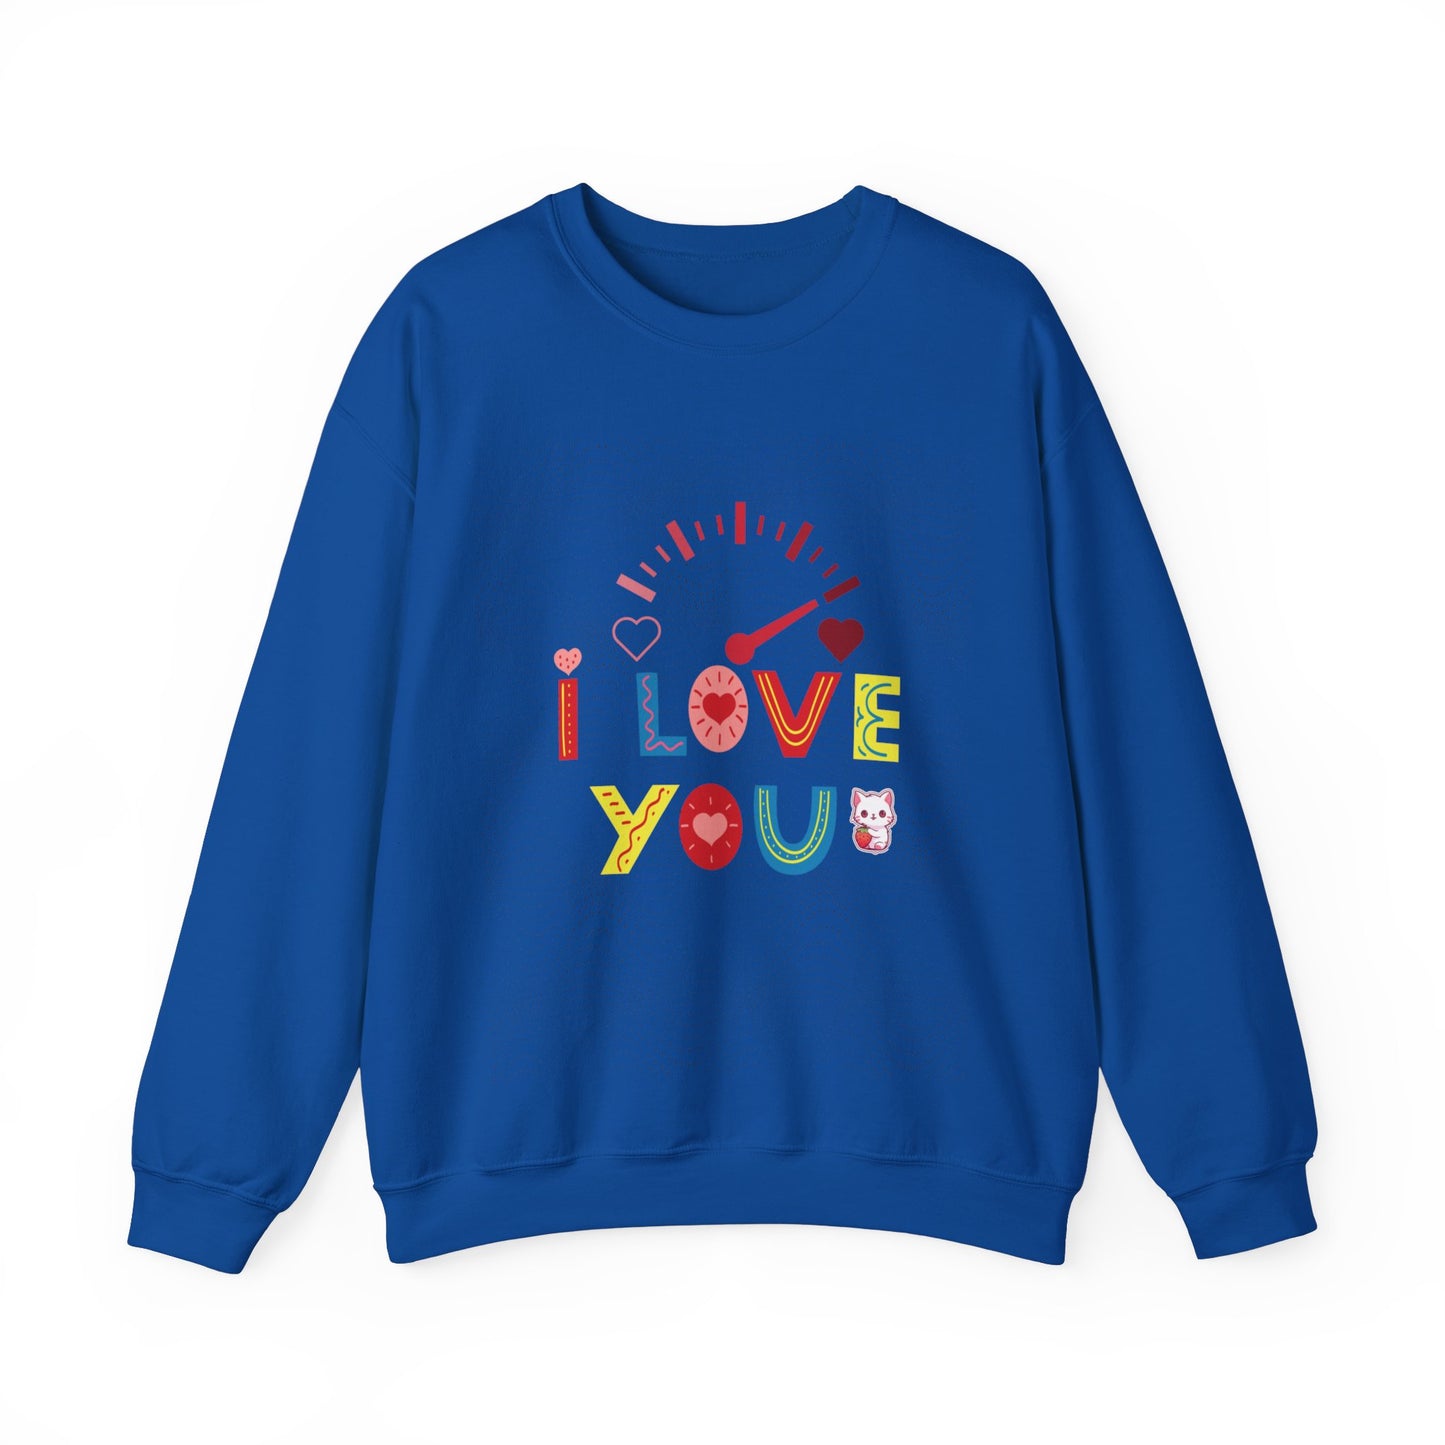 I Love You Gauge" Unisex Heavy Blend Crewneck Sweatshirt - Cozy Comfort for Every Season